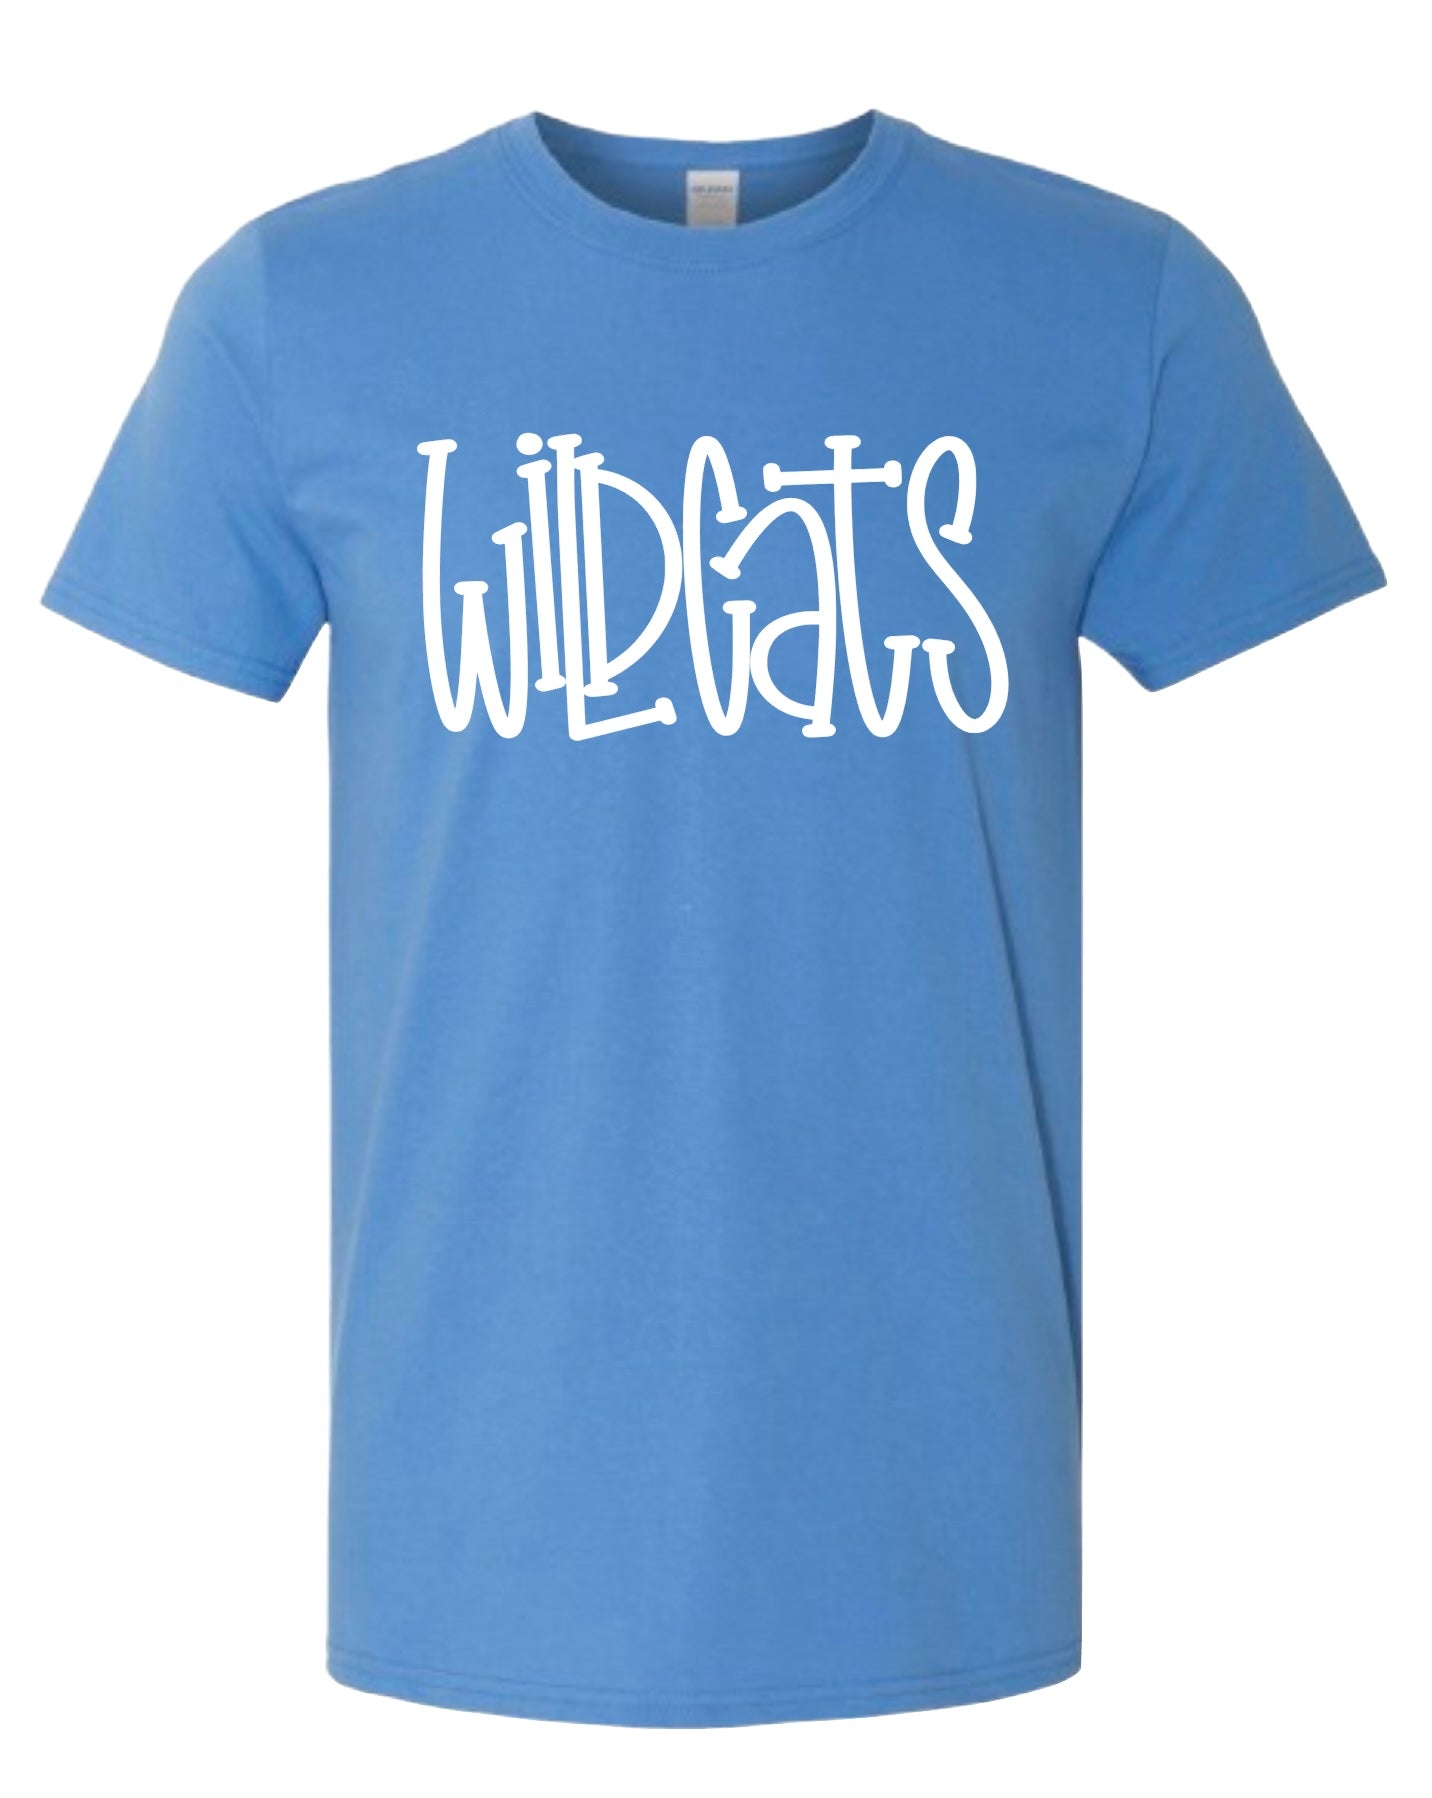 Wildcats Quirky Design Tshirt